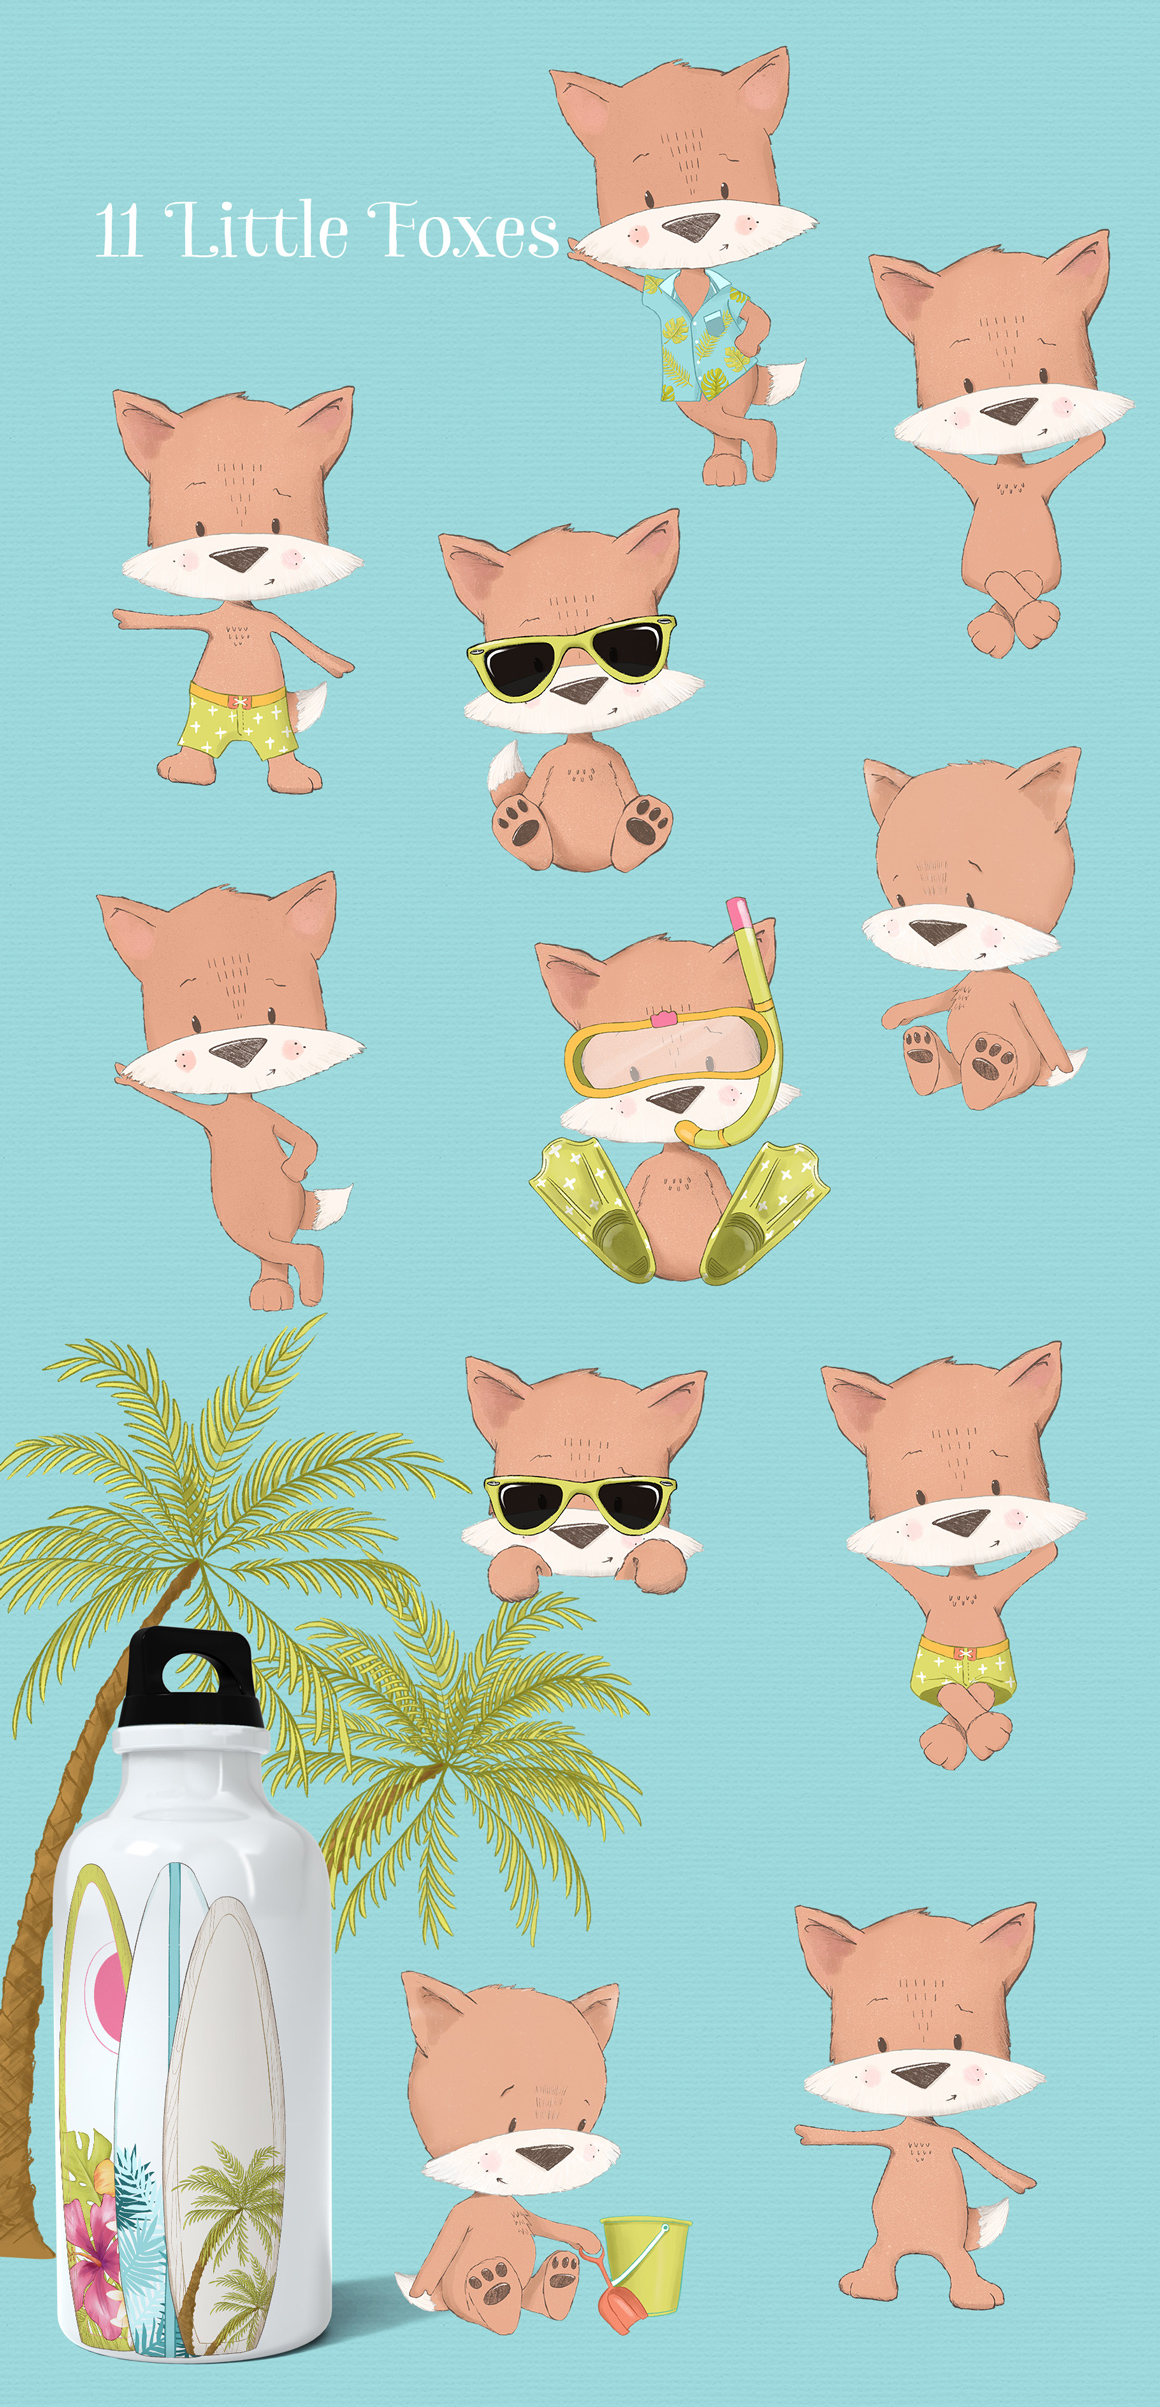 Summer Lovin' Animal Clipart Kit